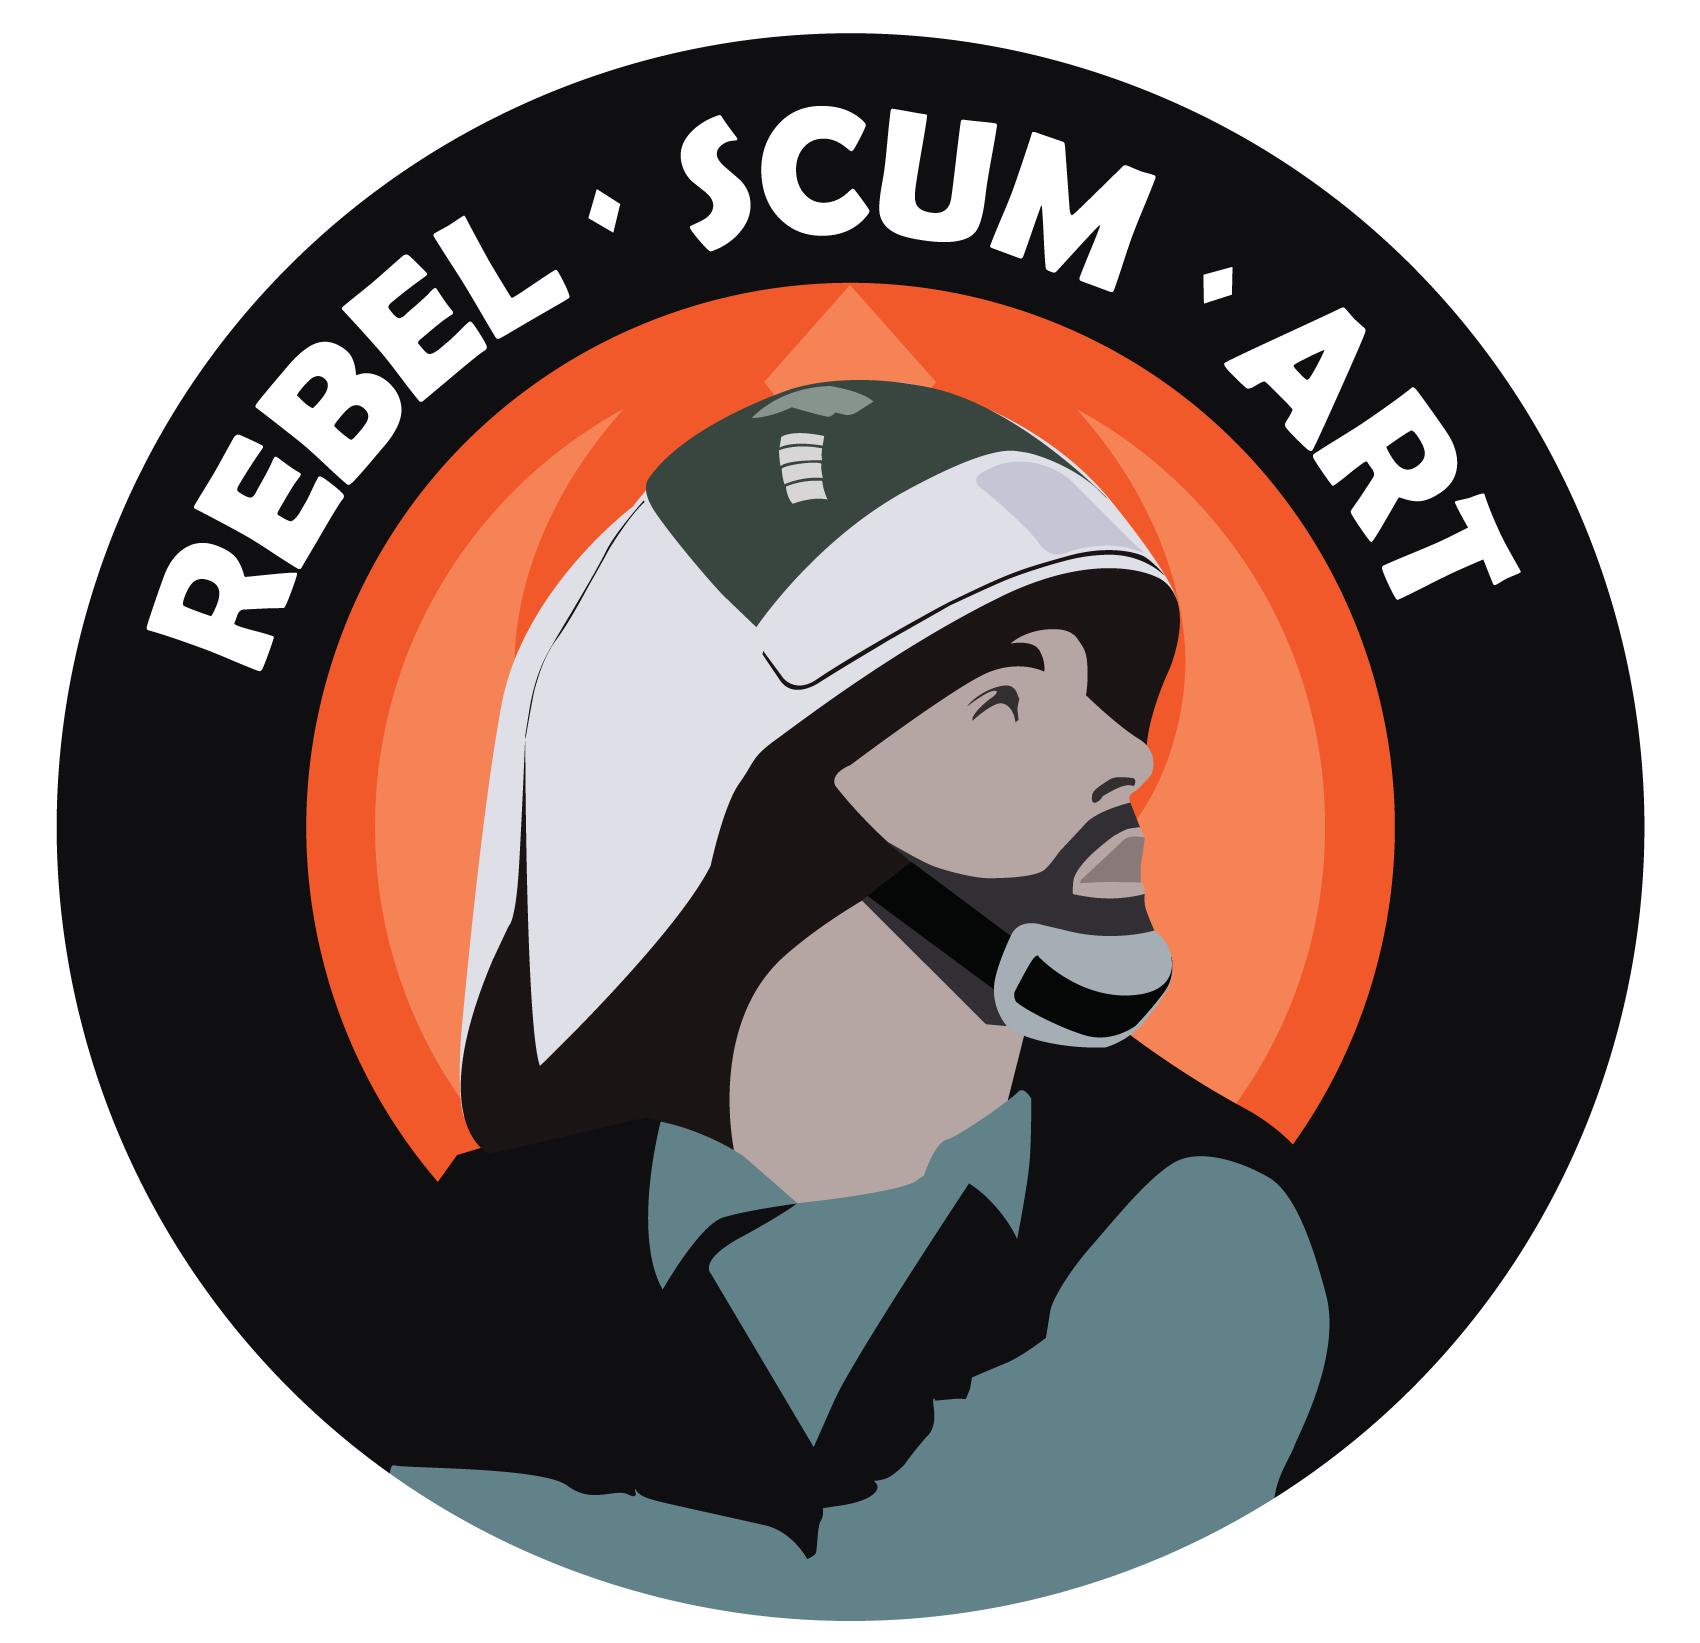 Rebel Scum Art logo